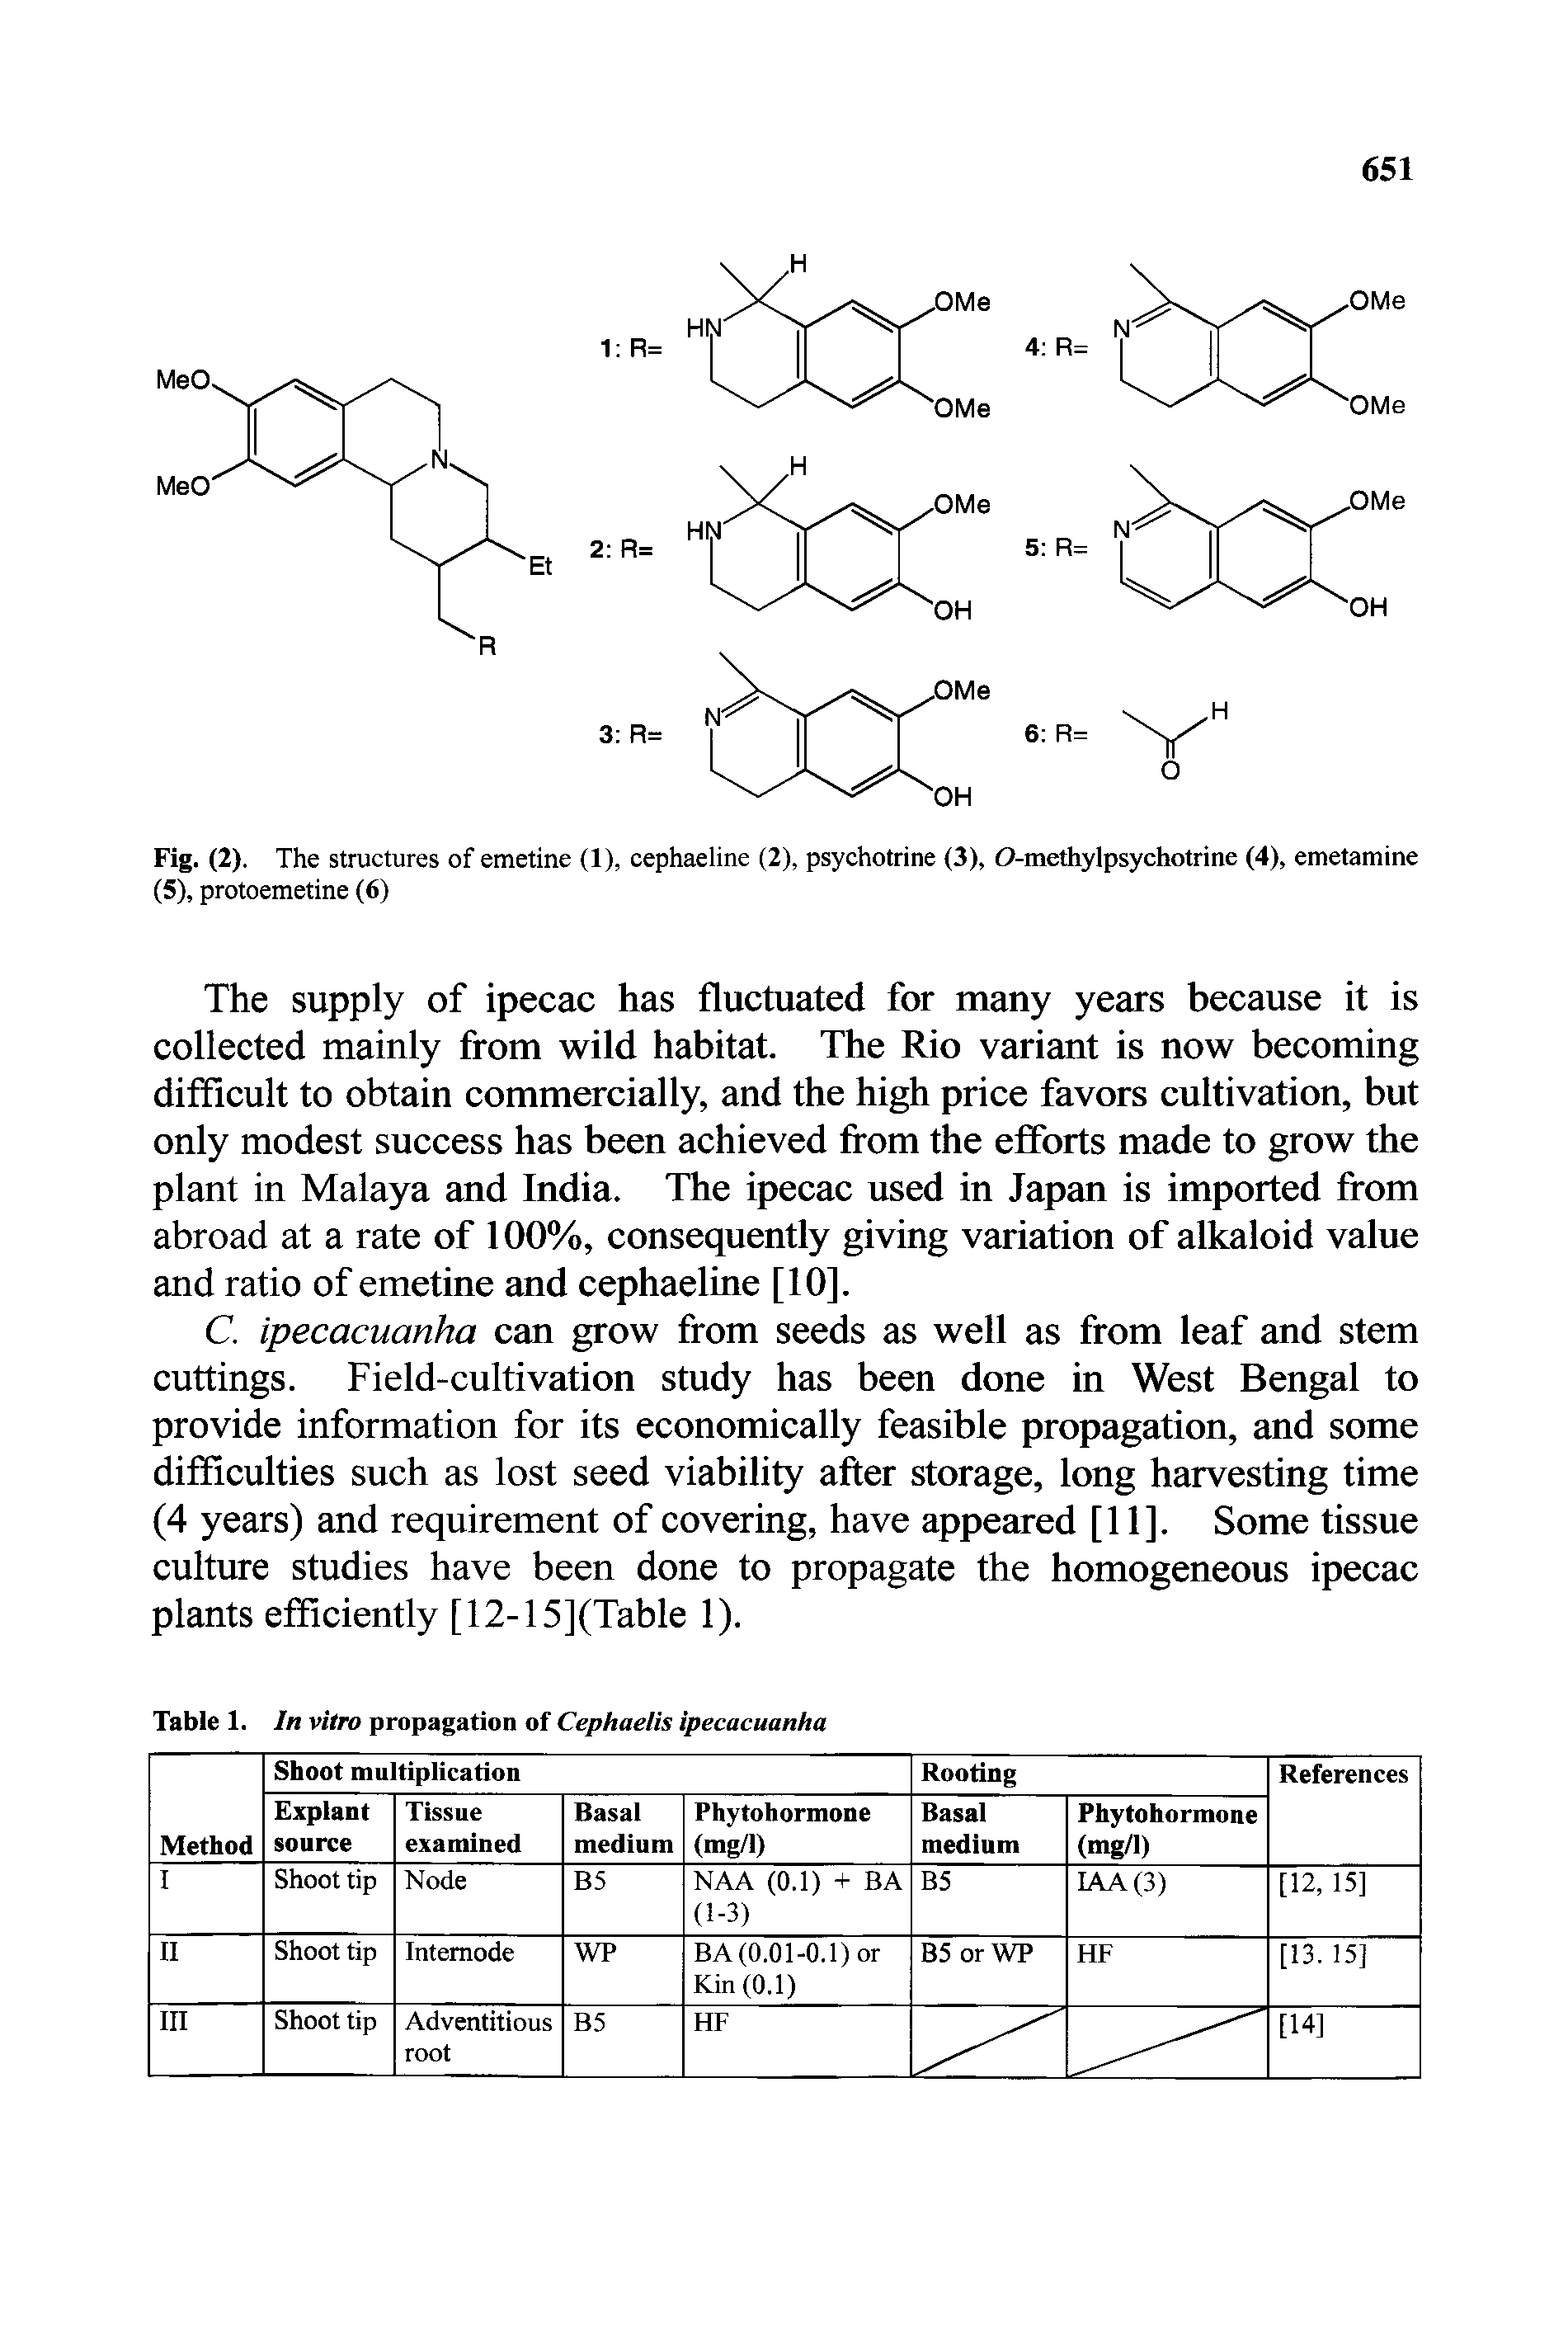 Fig. (2). The structures of emetine (1), cephaeline (2), psychotrine (3), O-methylpsychotrine (4), emetamine (5), protoemetine (6)...